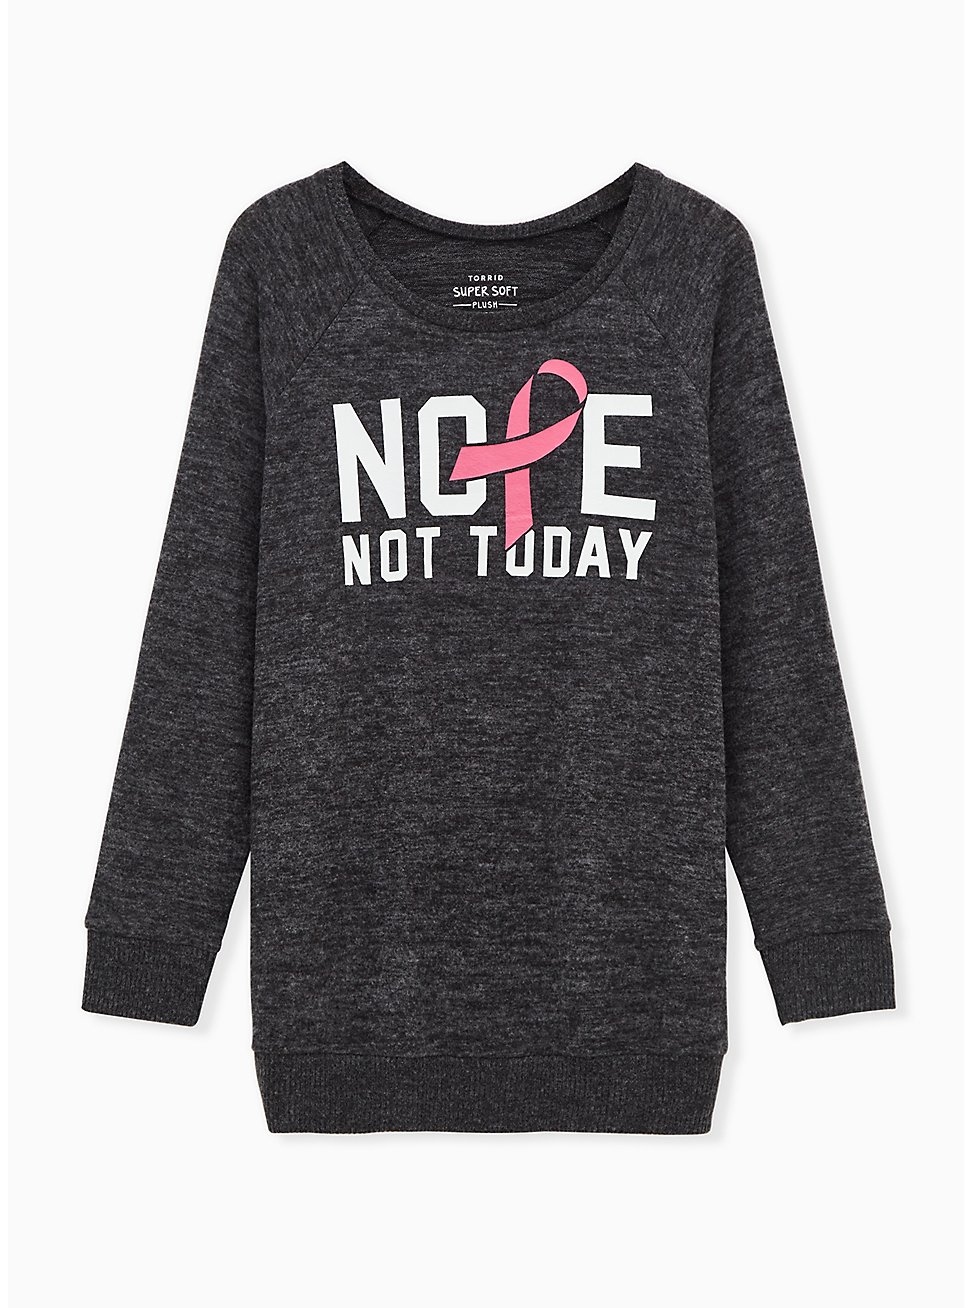 Breast Cancer Awareness - Nope Not Today Super Soft Plush Black Sweatshirt, DEEP BLACK, hi-res